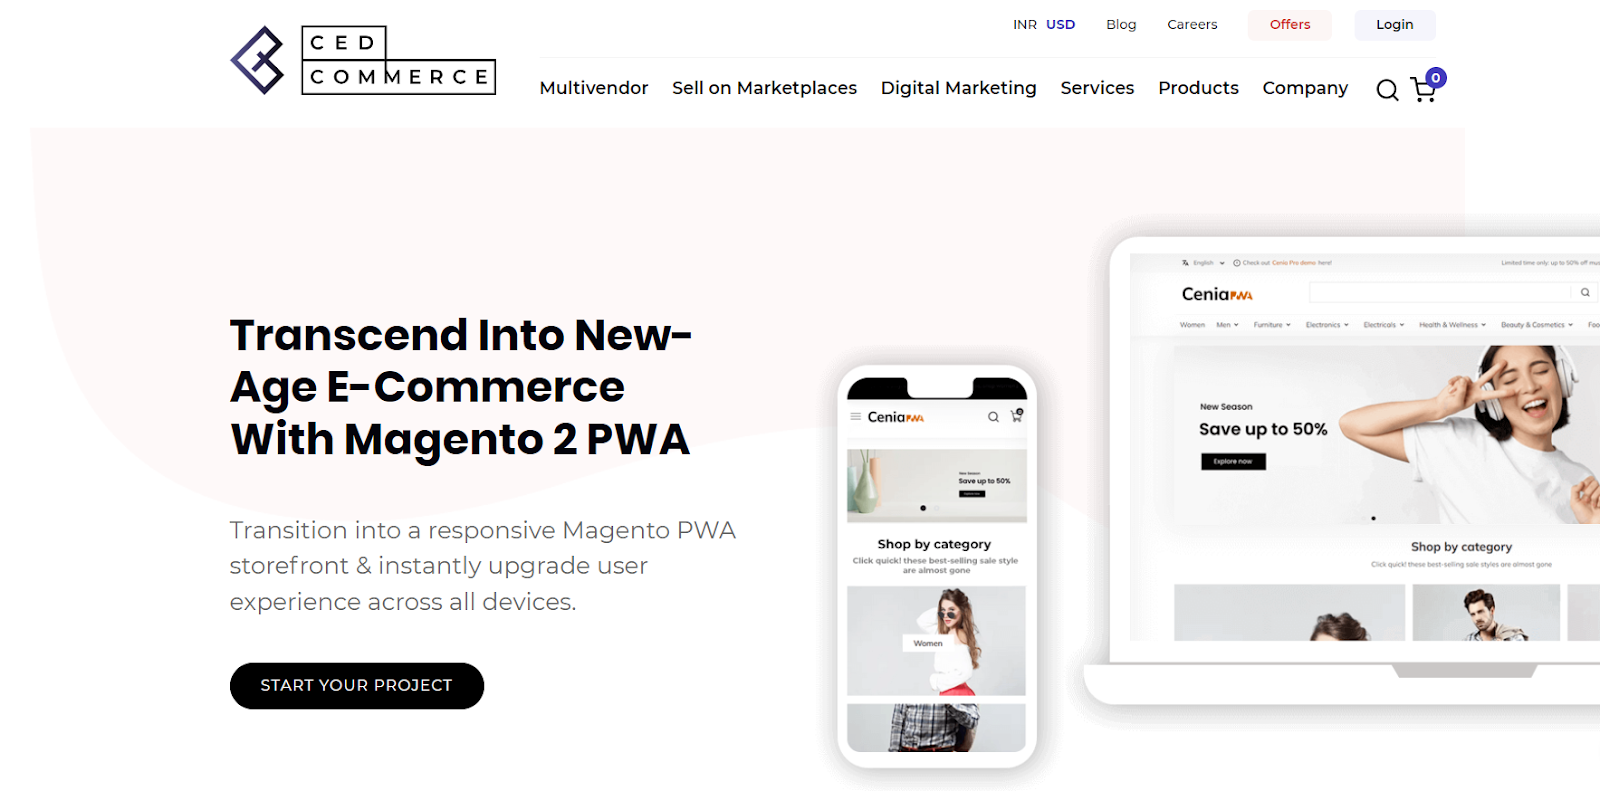 CedCommerce's Magento 2 PWA Studio Theme: Enhanced User Experience